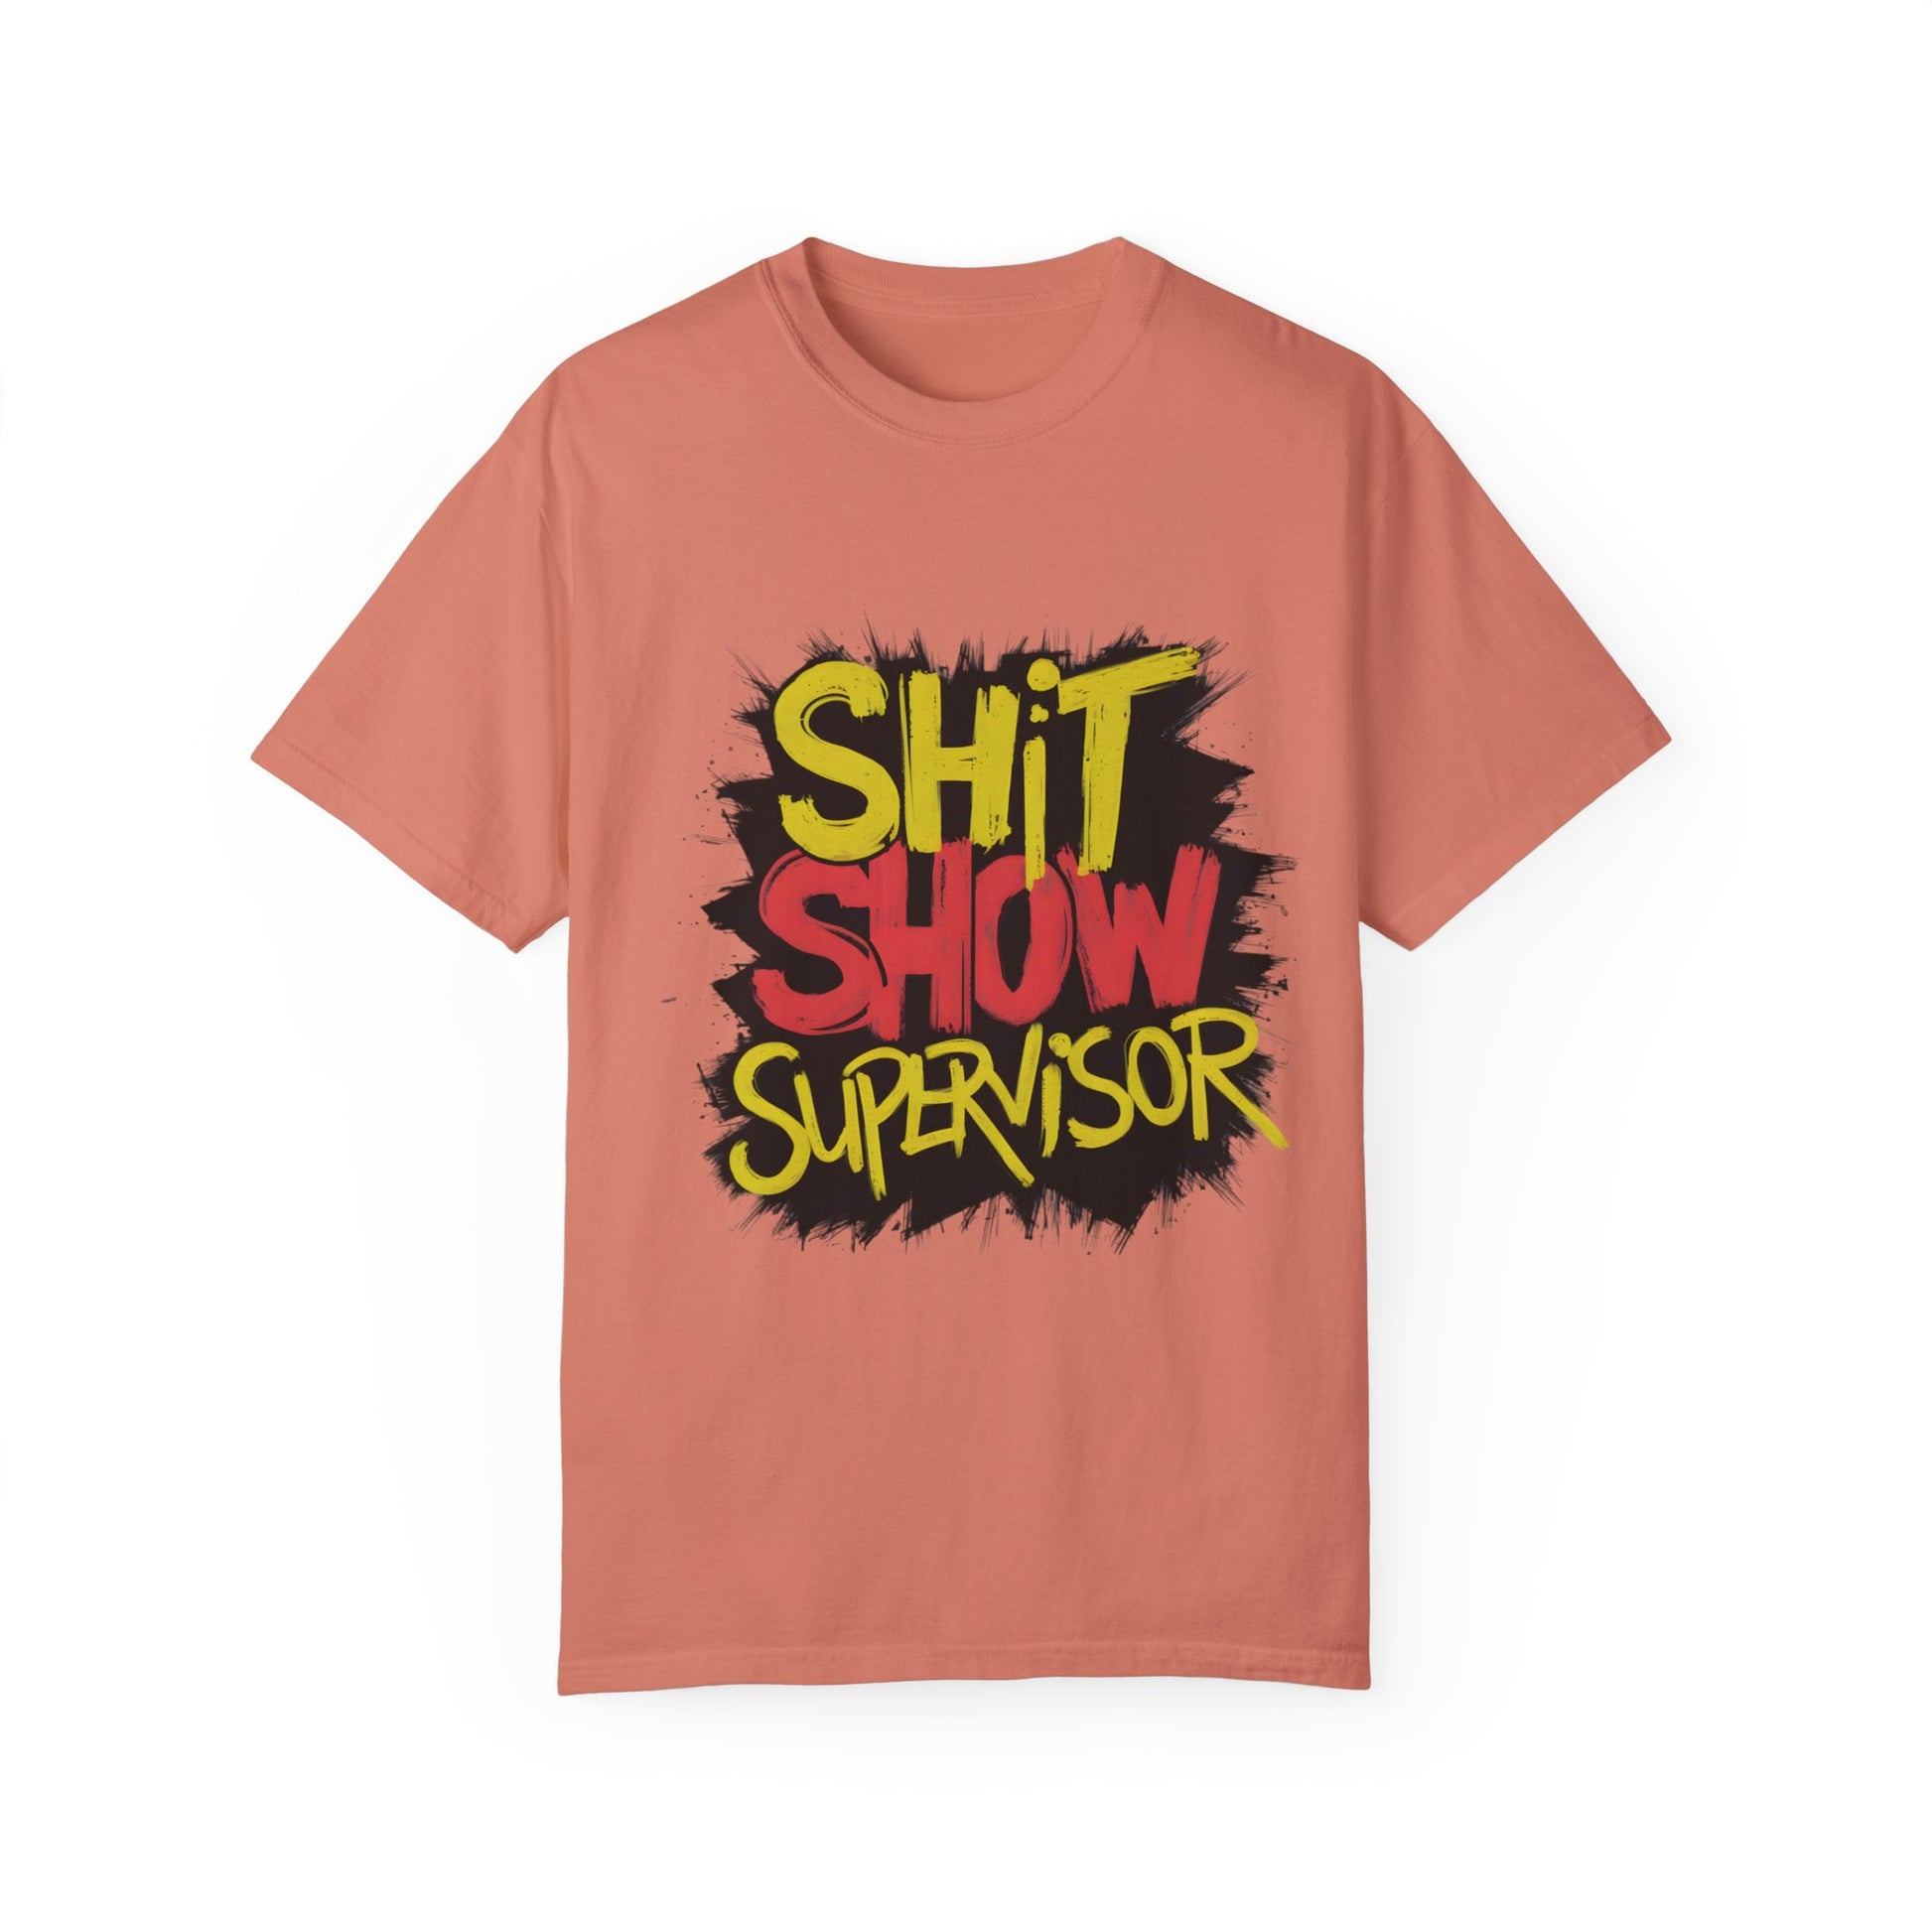 Shit Show Supervisor Urban Sarcastic Graphic Unisex Garment Dyed T-shirt Cotton Funny Humorous Graphic Soft Premium Unisex Men Women Terracotta T-shirt Birthday Gift-14